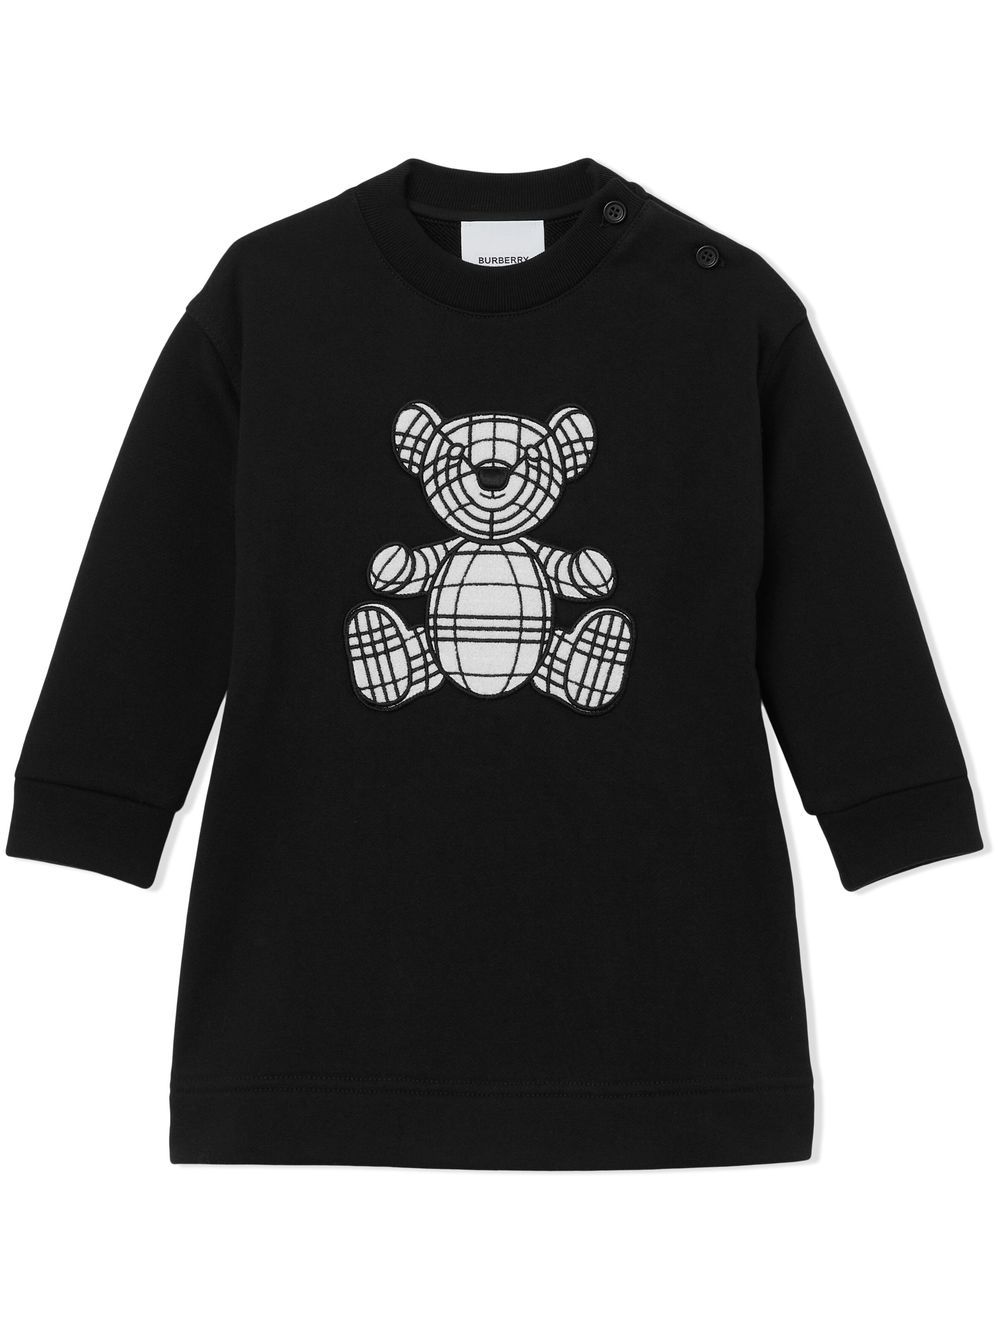 Burberry Kids embroidered Thomas bear sweater dress - Black von Burberry Kids